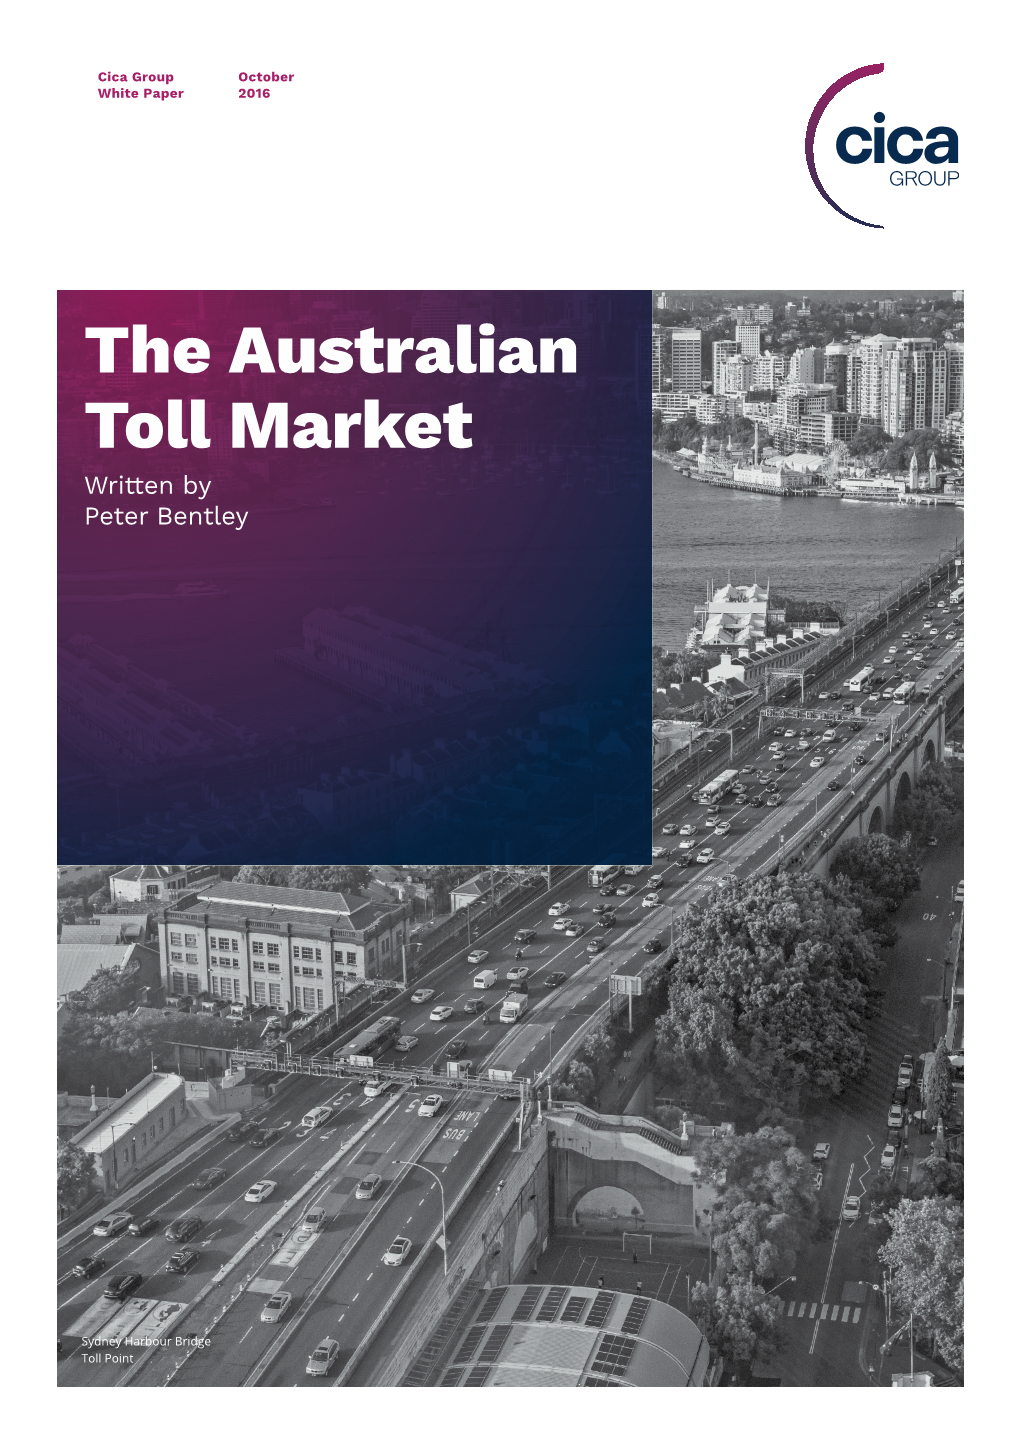 The Australian Toll Market Written by Peter Bentley